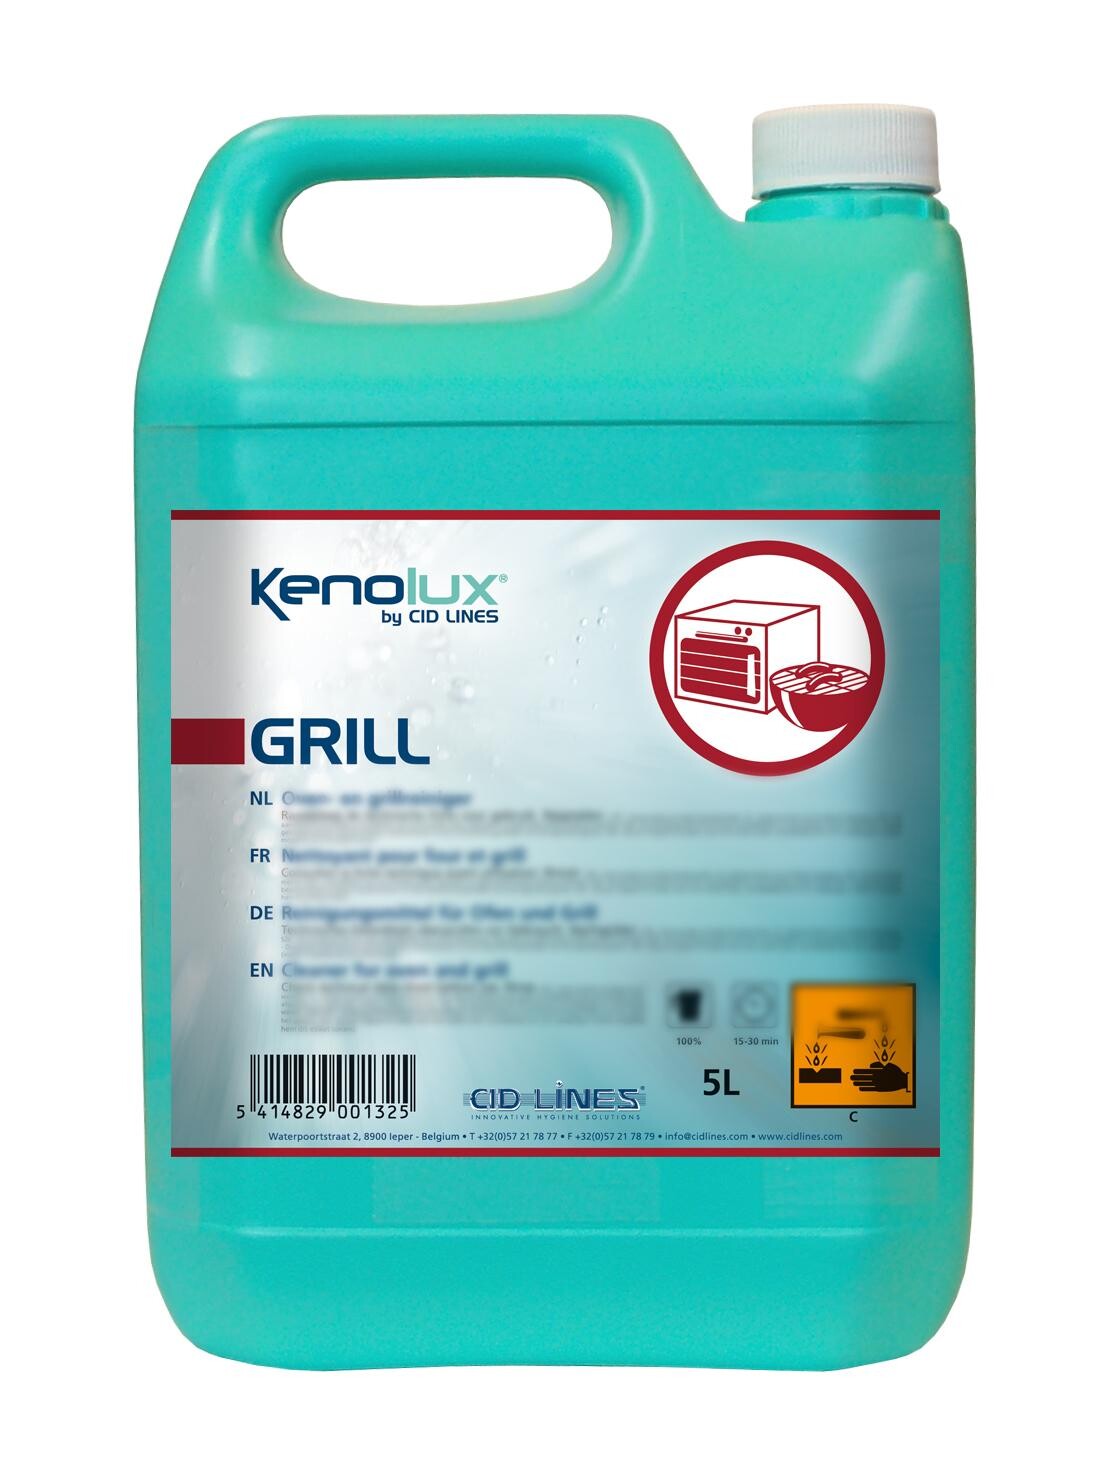 Kenolux Grill 5L CID Lines ovenreiniger & grillreiniger